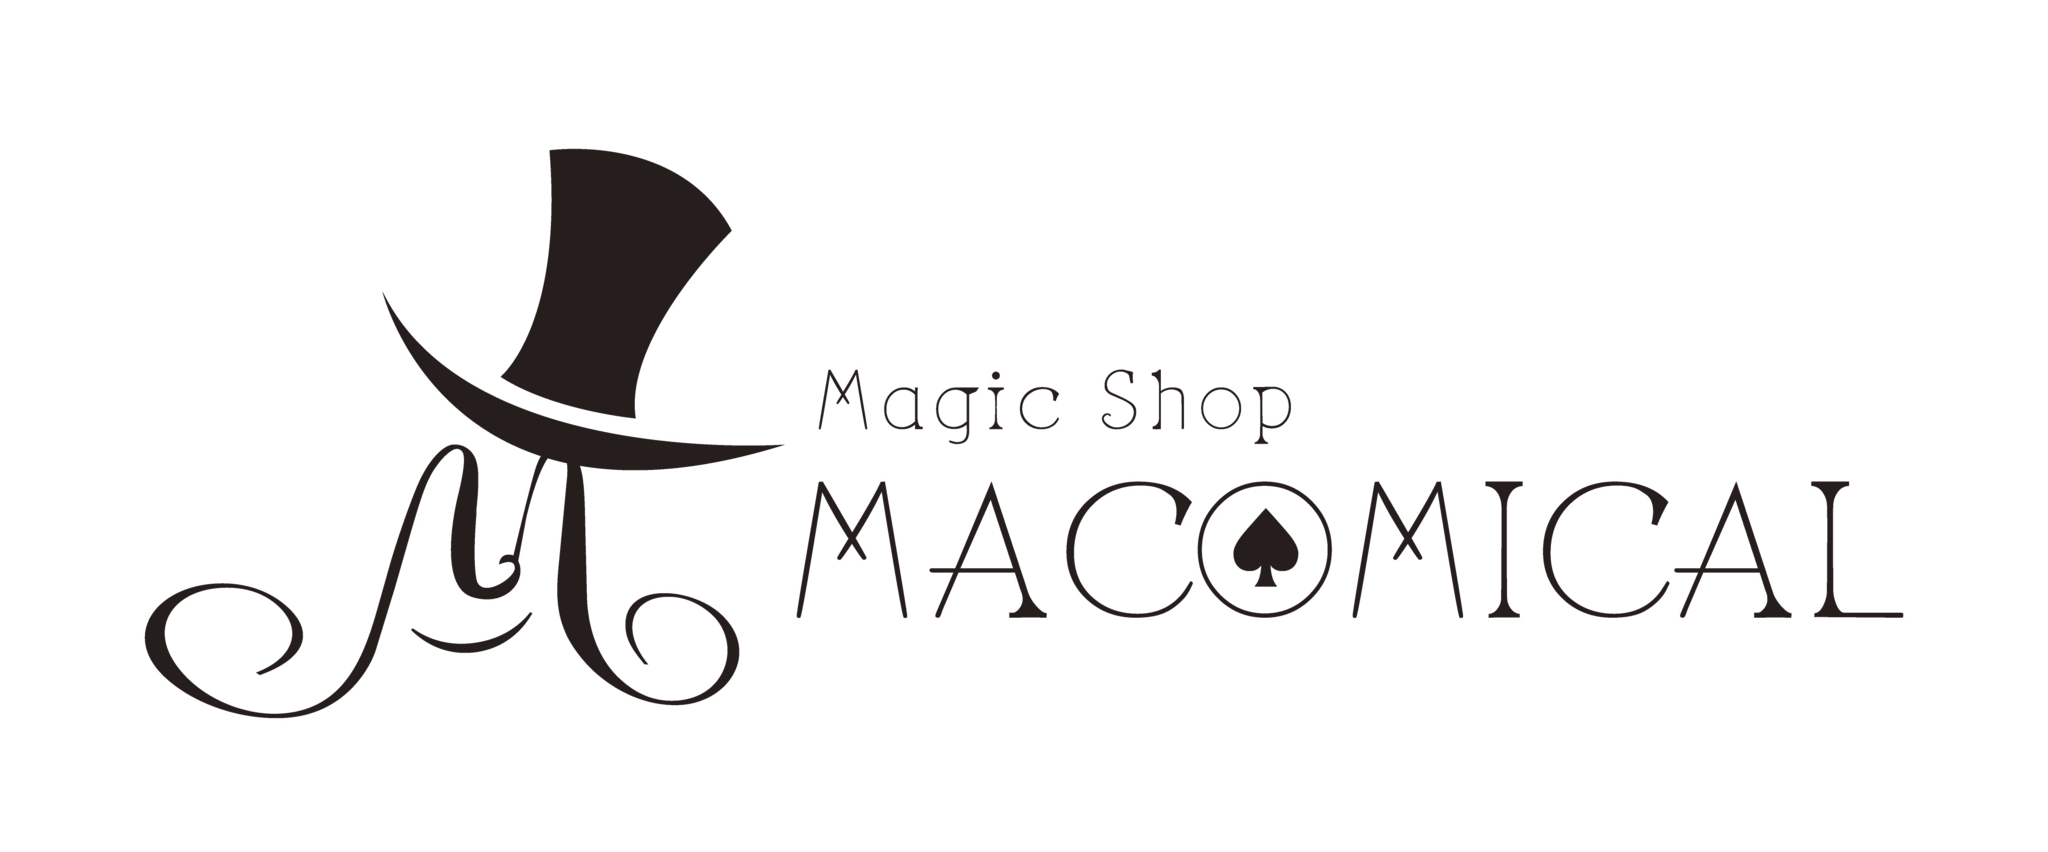 Macomical Shop